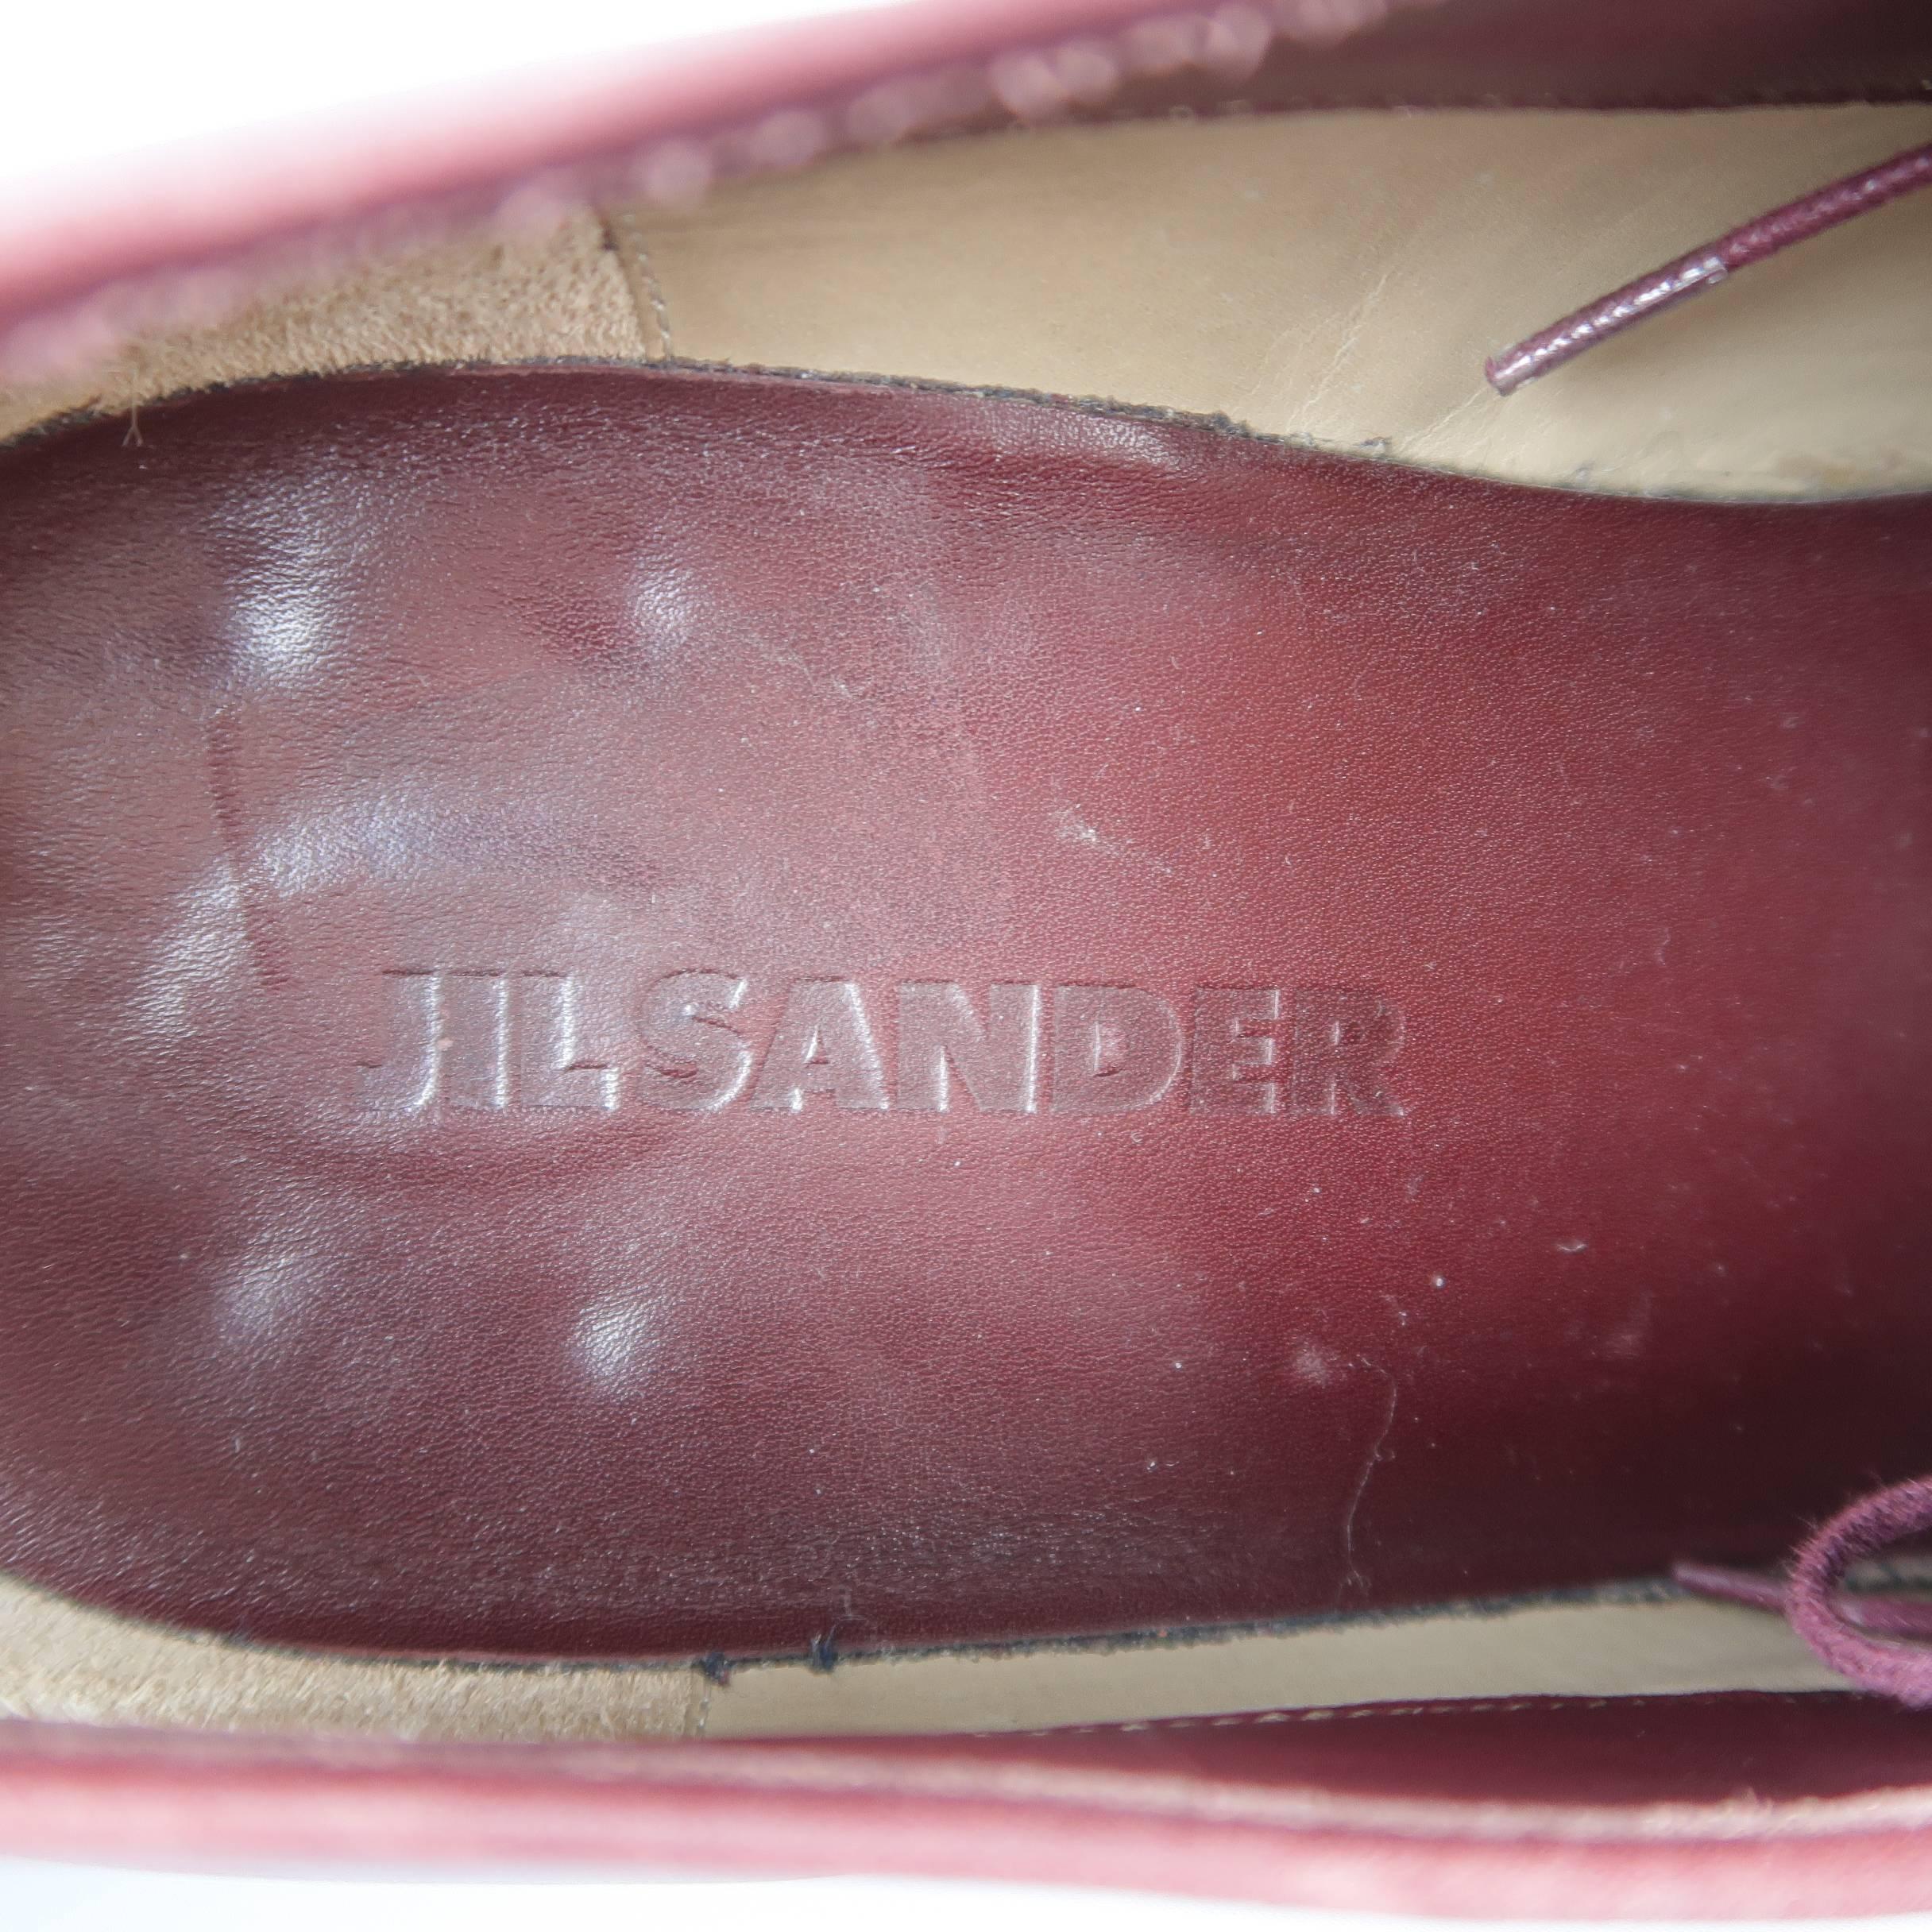 Brown Men's JIL SANDER Shoes Size 10 Oxblood Burgundy  Leather Lace Up